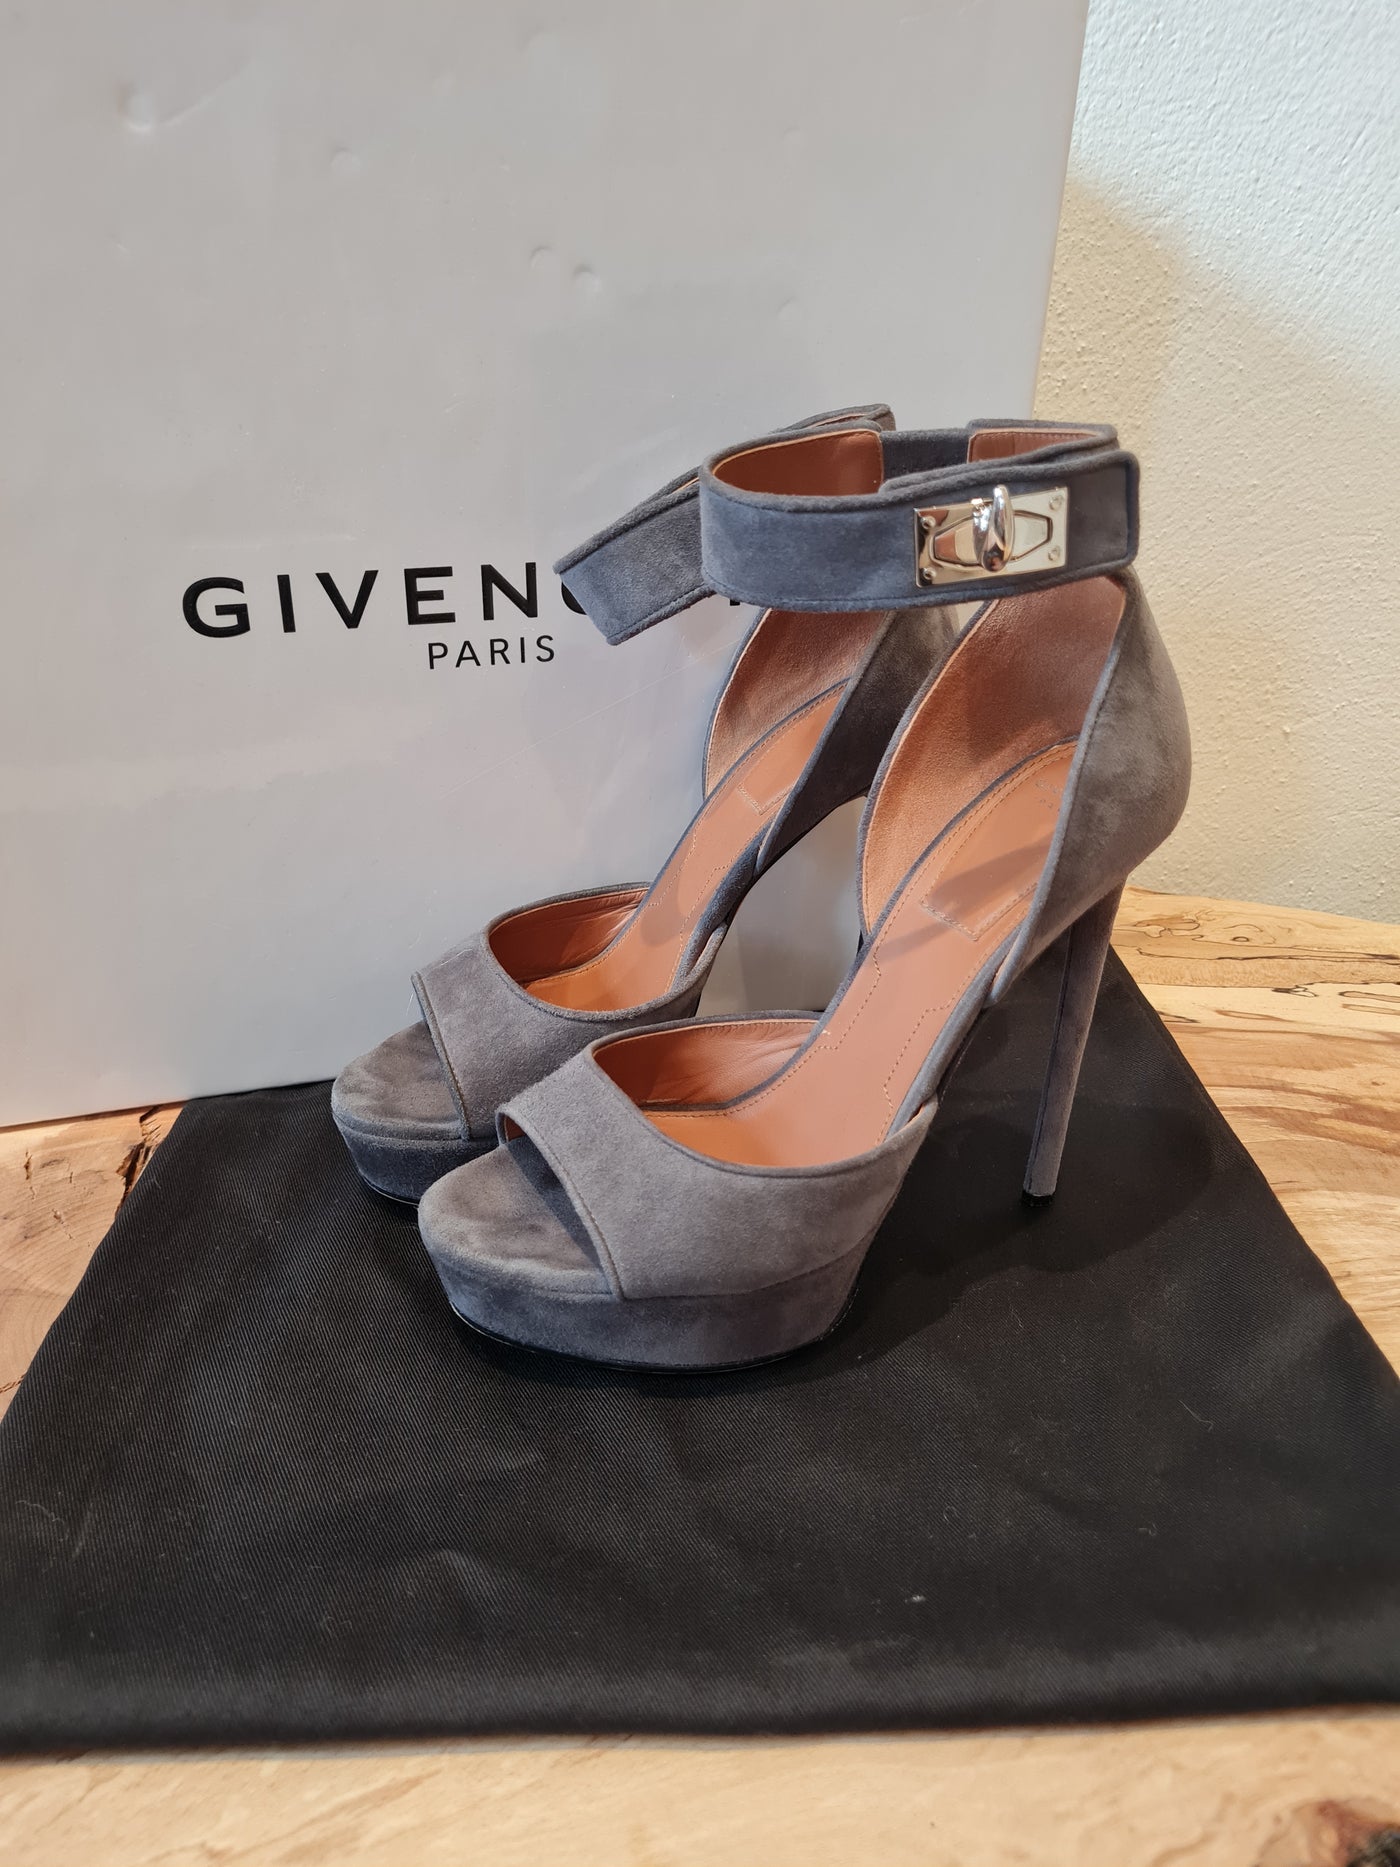 Givenchy Paris Shark Grey Suede Platforms Size 4 RRP £800